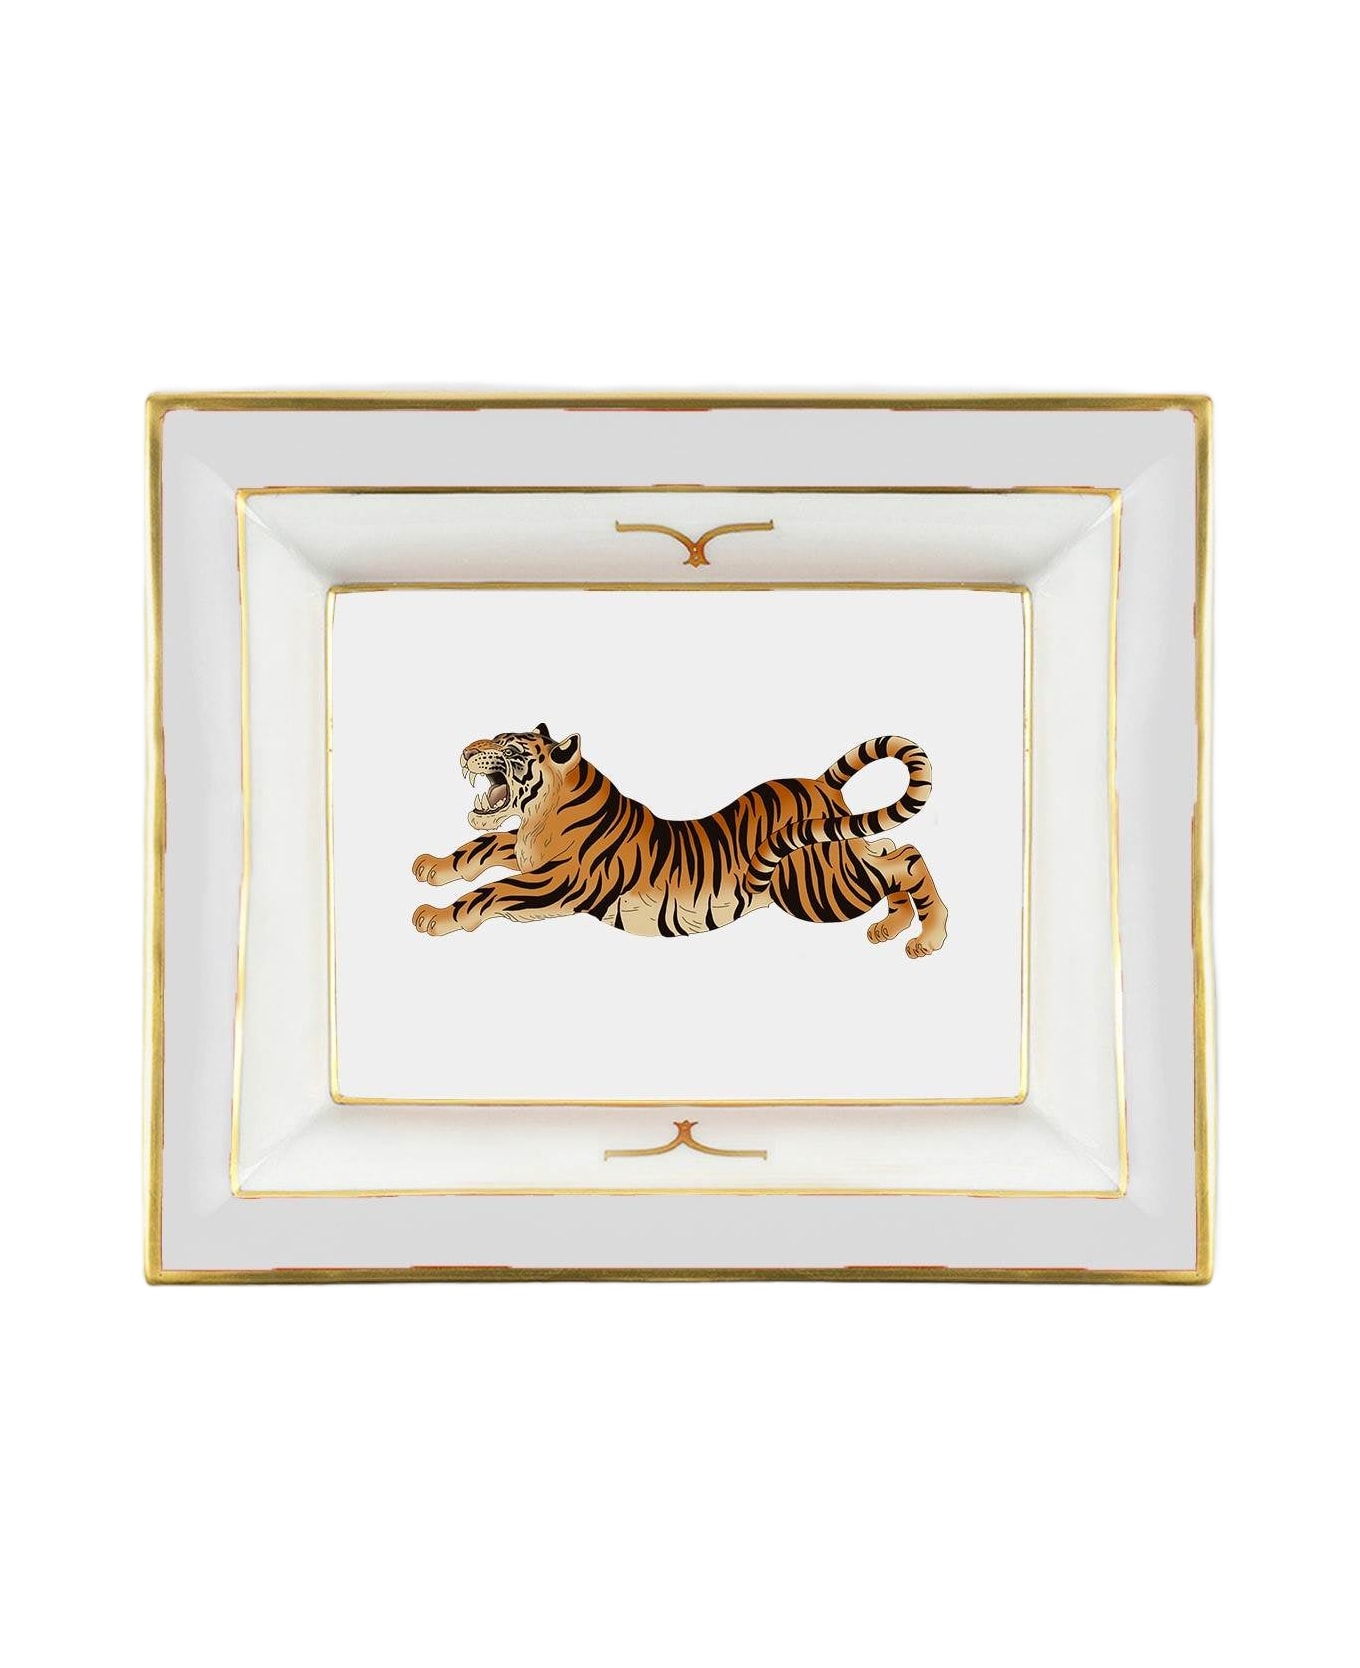 Larusmiani Pocket Emptier "tigre"  - White